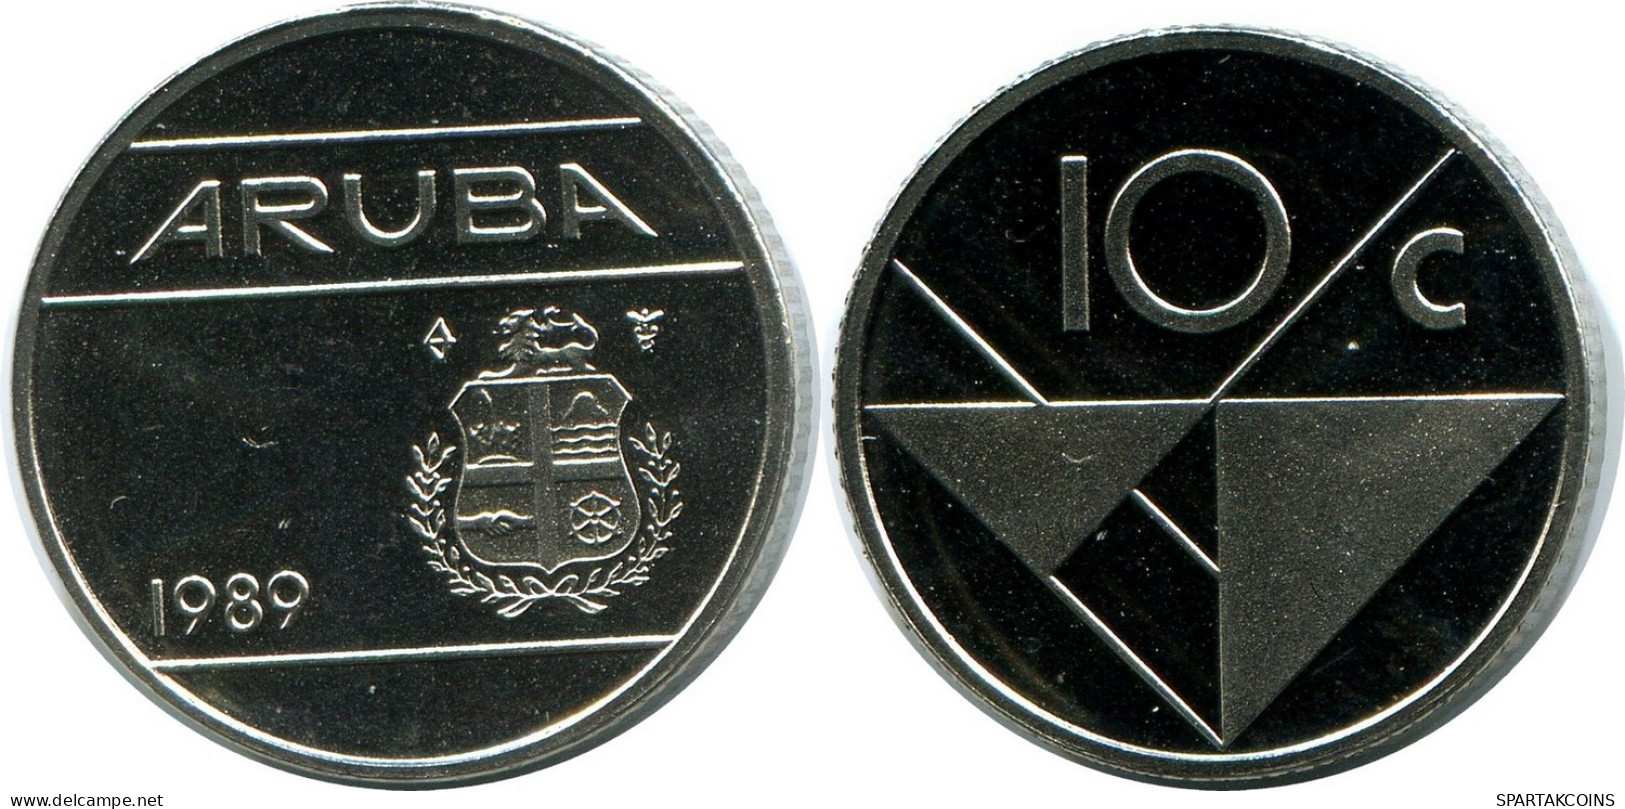 10 CENTS 1989 ARUBA Coin (From BU Mint Set) #AH075.U - Aruba